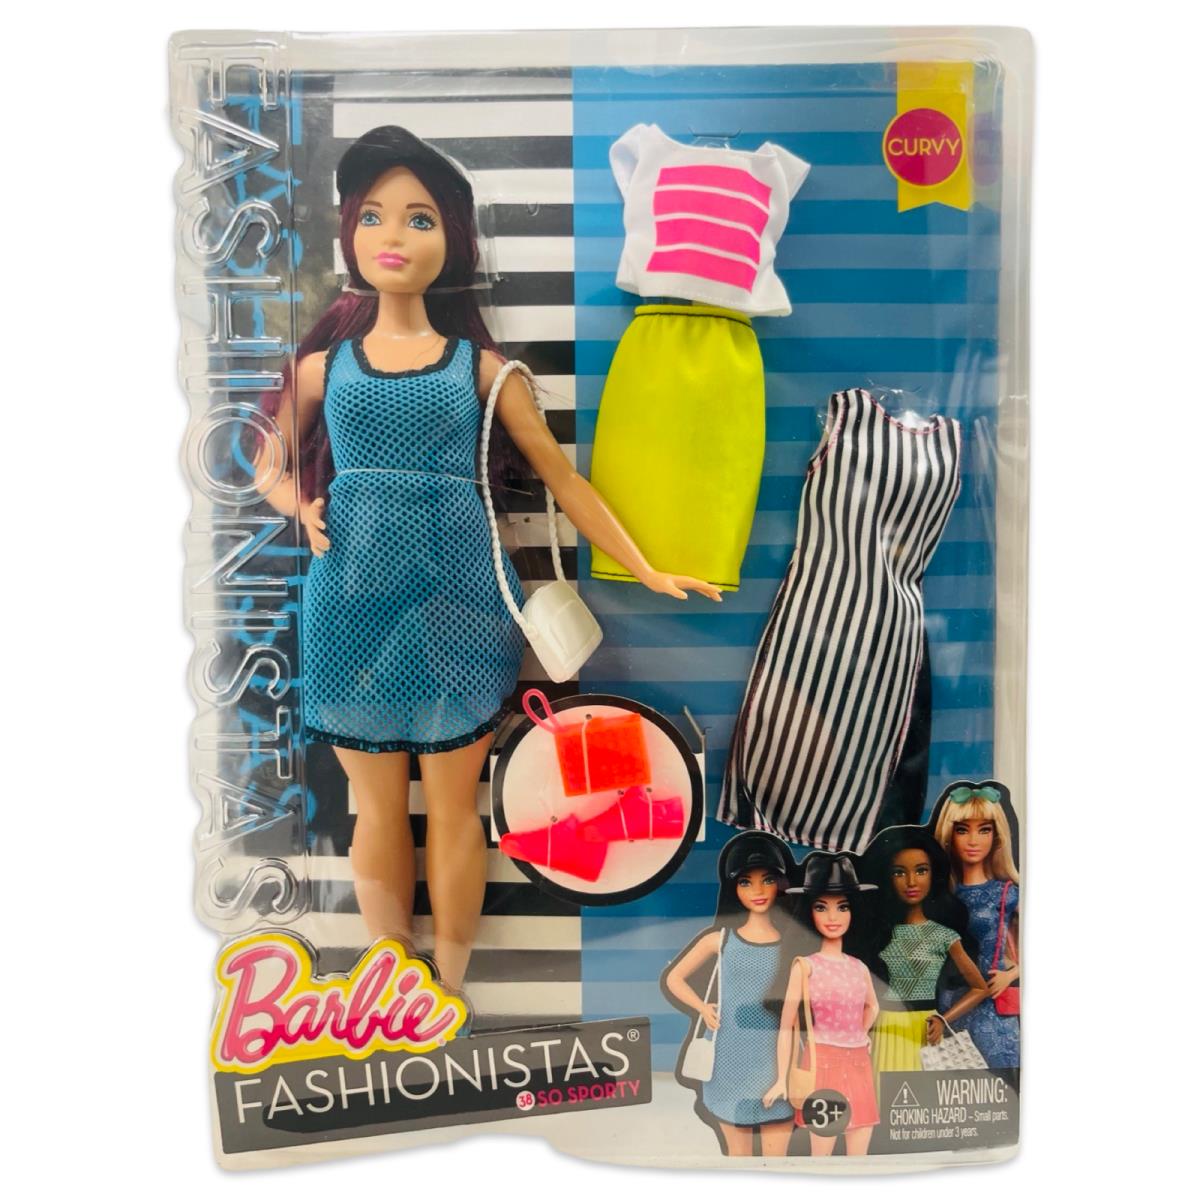 2015 Mattel Barbie Fashionistas So Sporty Curvy 38 Nrfb